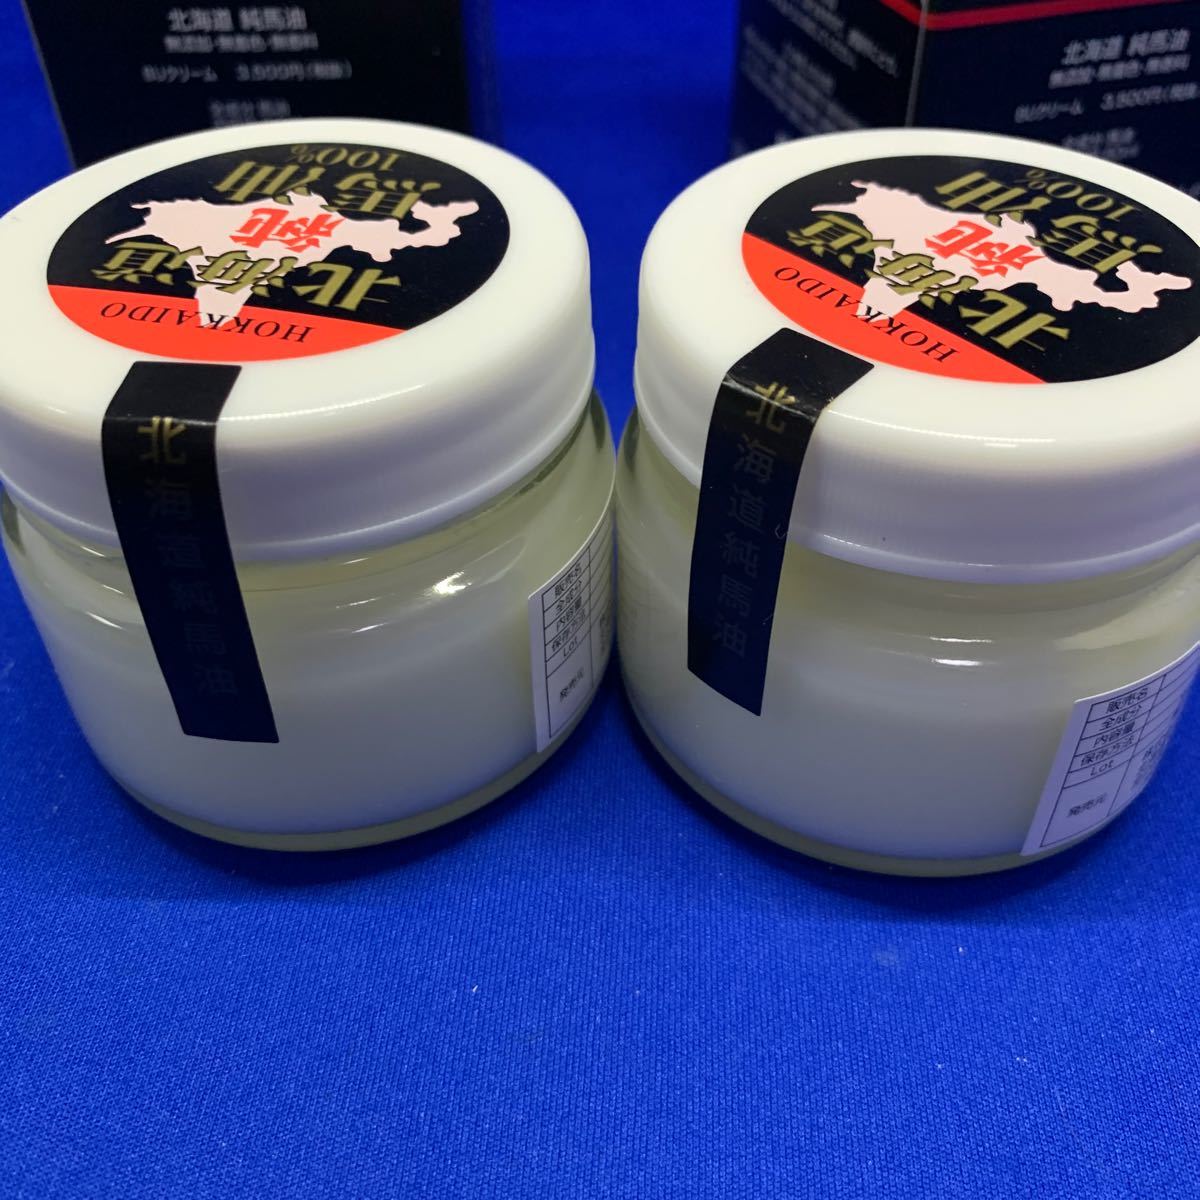 A0315 Hokkaido original horse oil cream ( horse oil 100%)-KH762006 2 piece set 